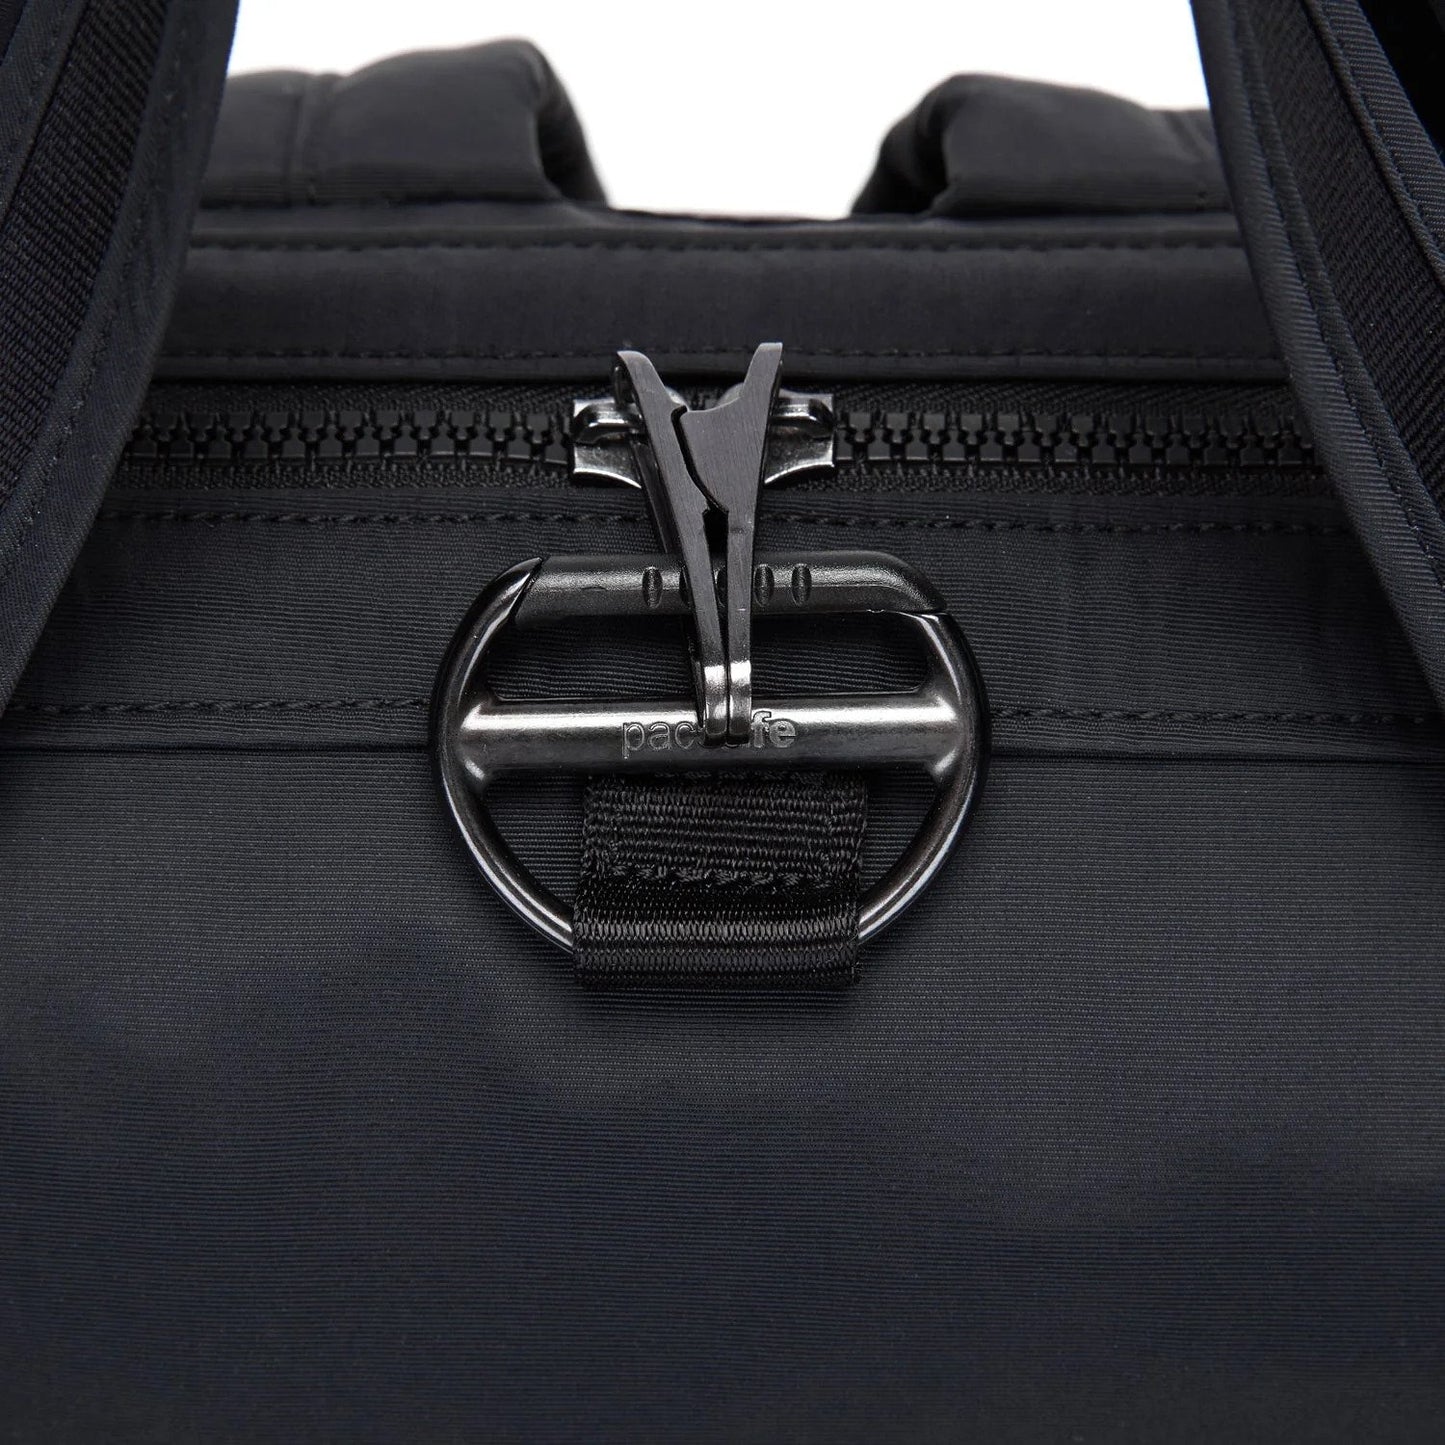 Pacsafe - Citysafe® CX Anti-Theft Backpack